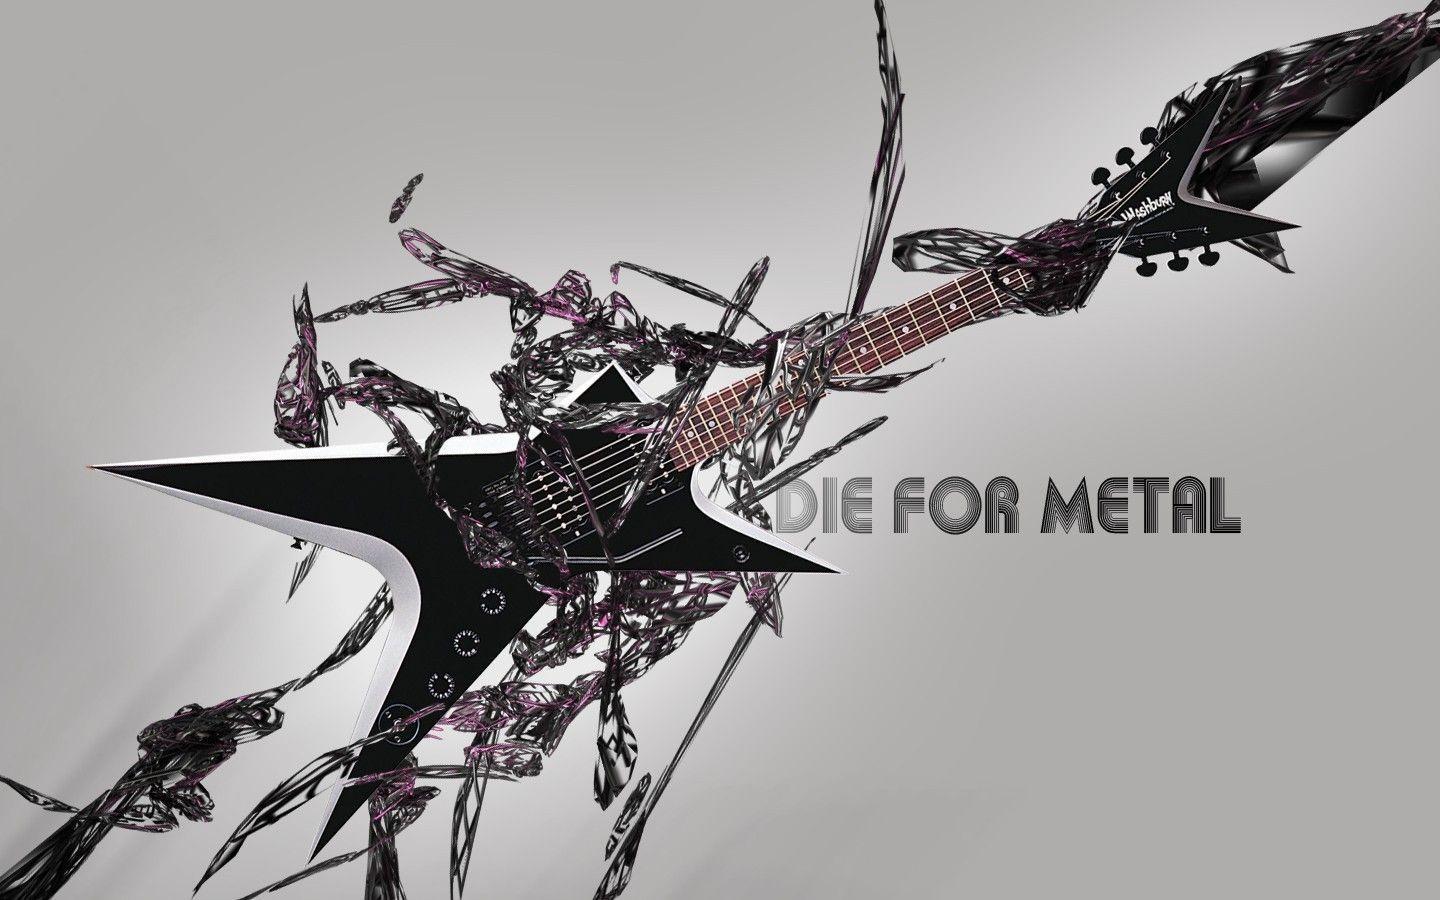 Metal Band Collage 2 Computer Wallpaper, Desktop Background